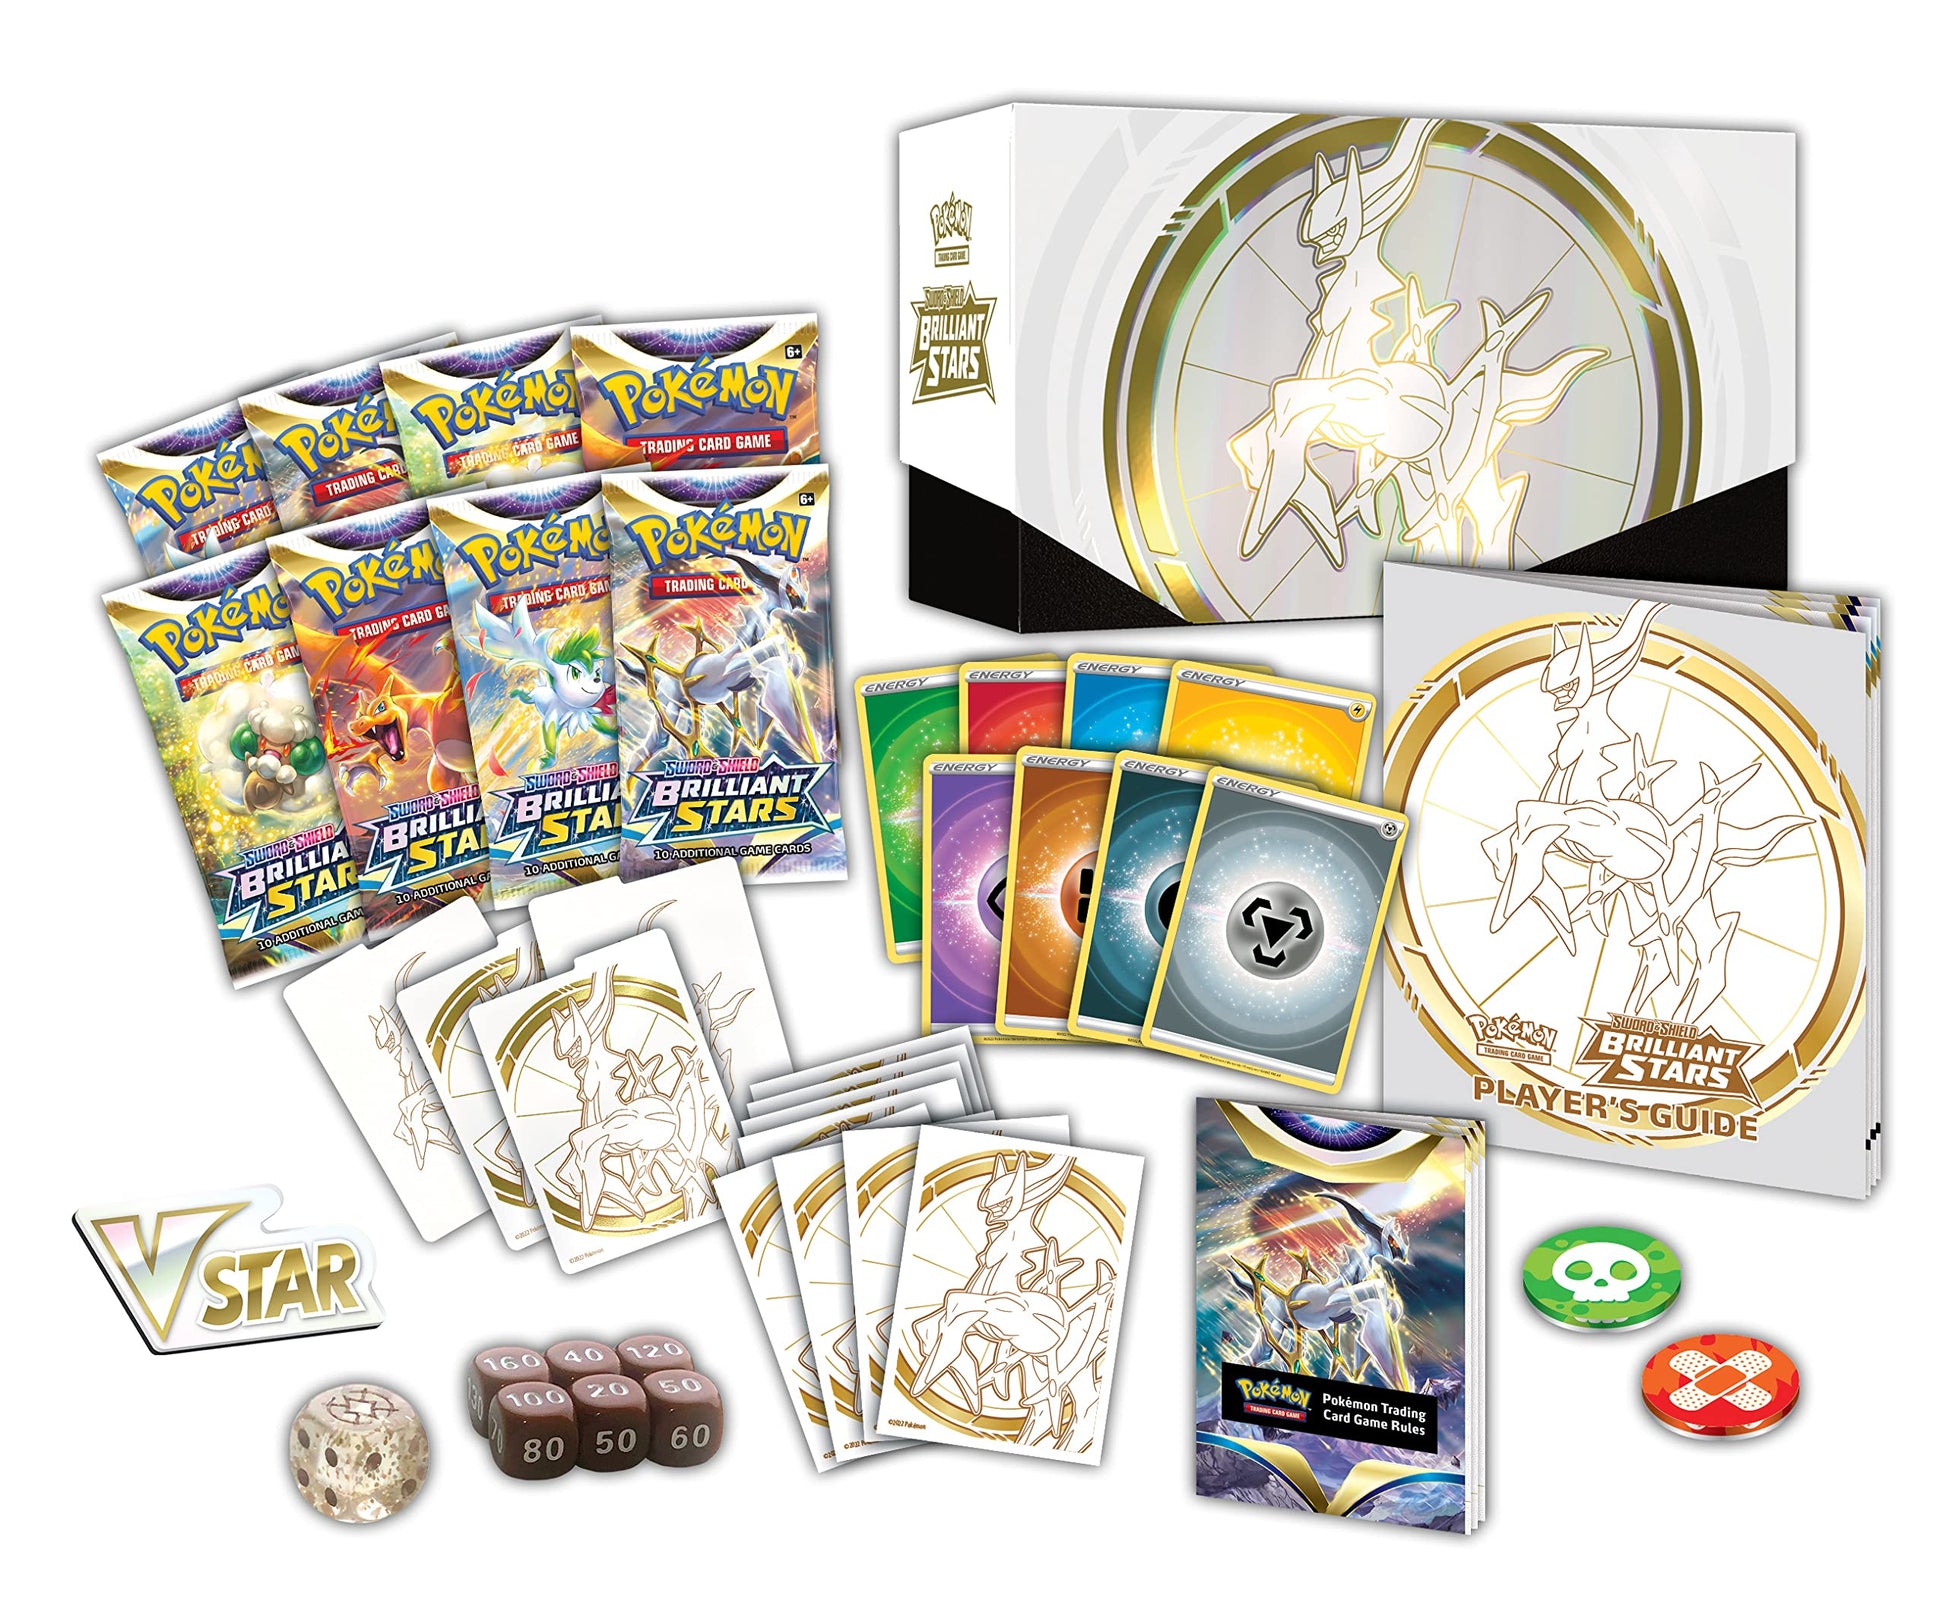 Pokemon Brilliant Stars Elite Trainer Box - Premier Trading Cards